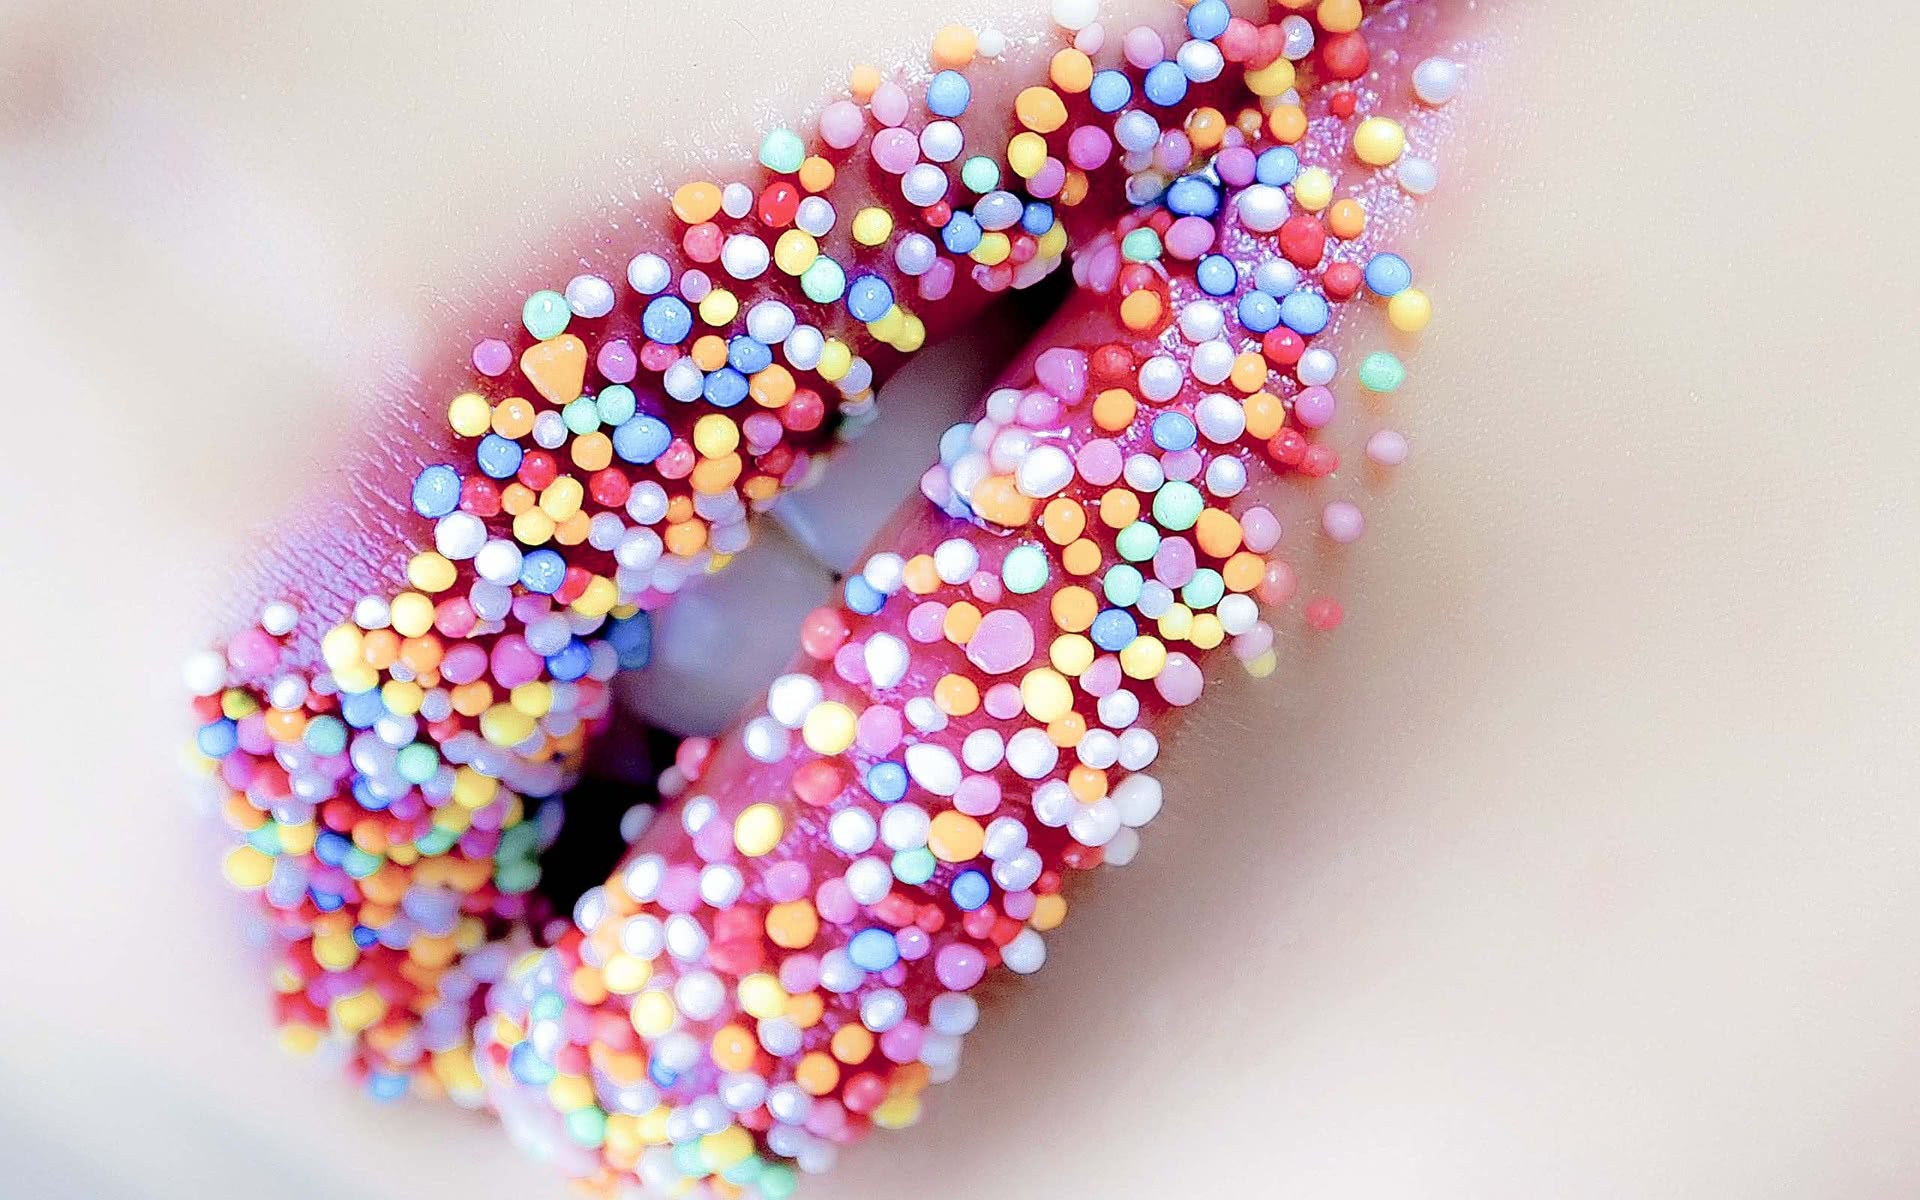 sweet lips